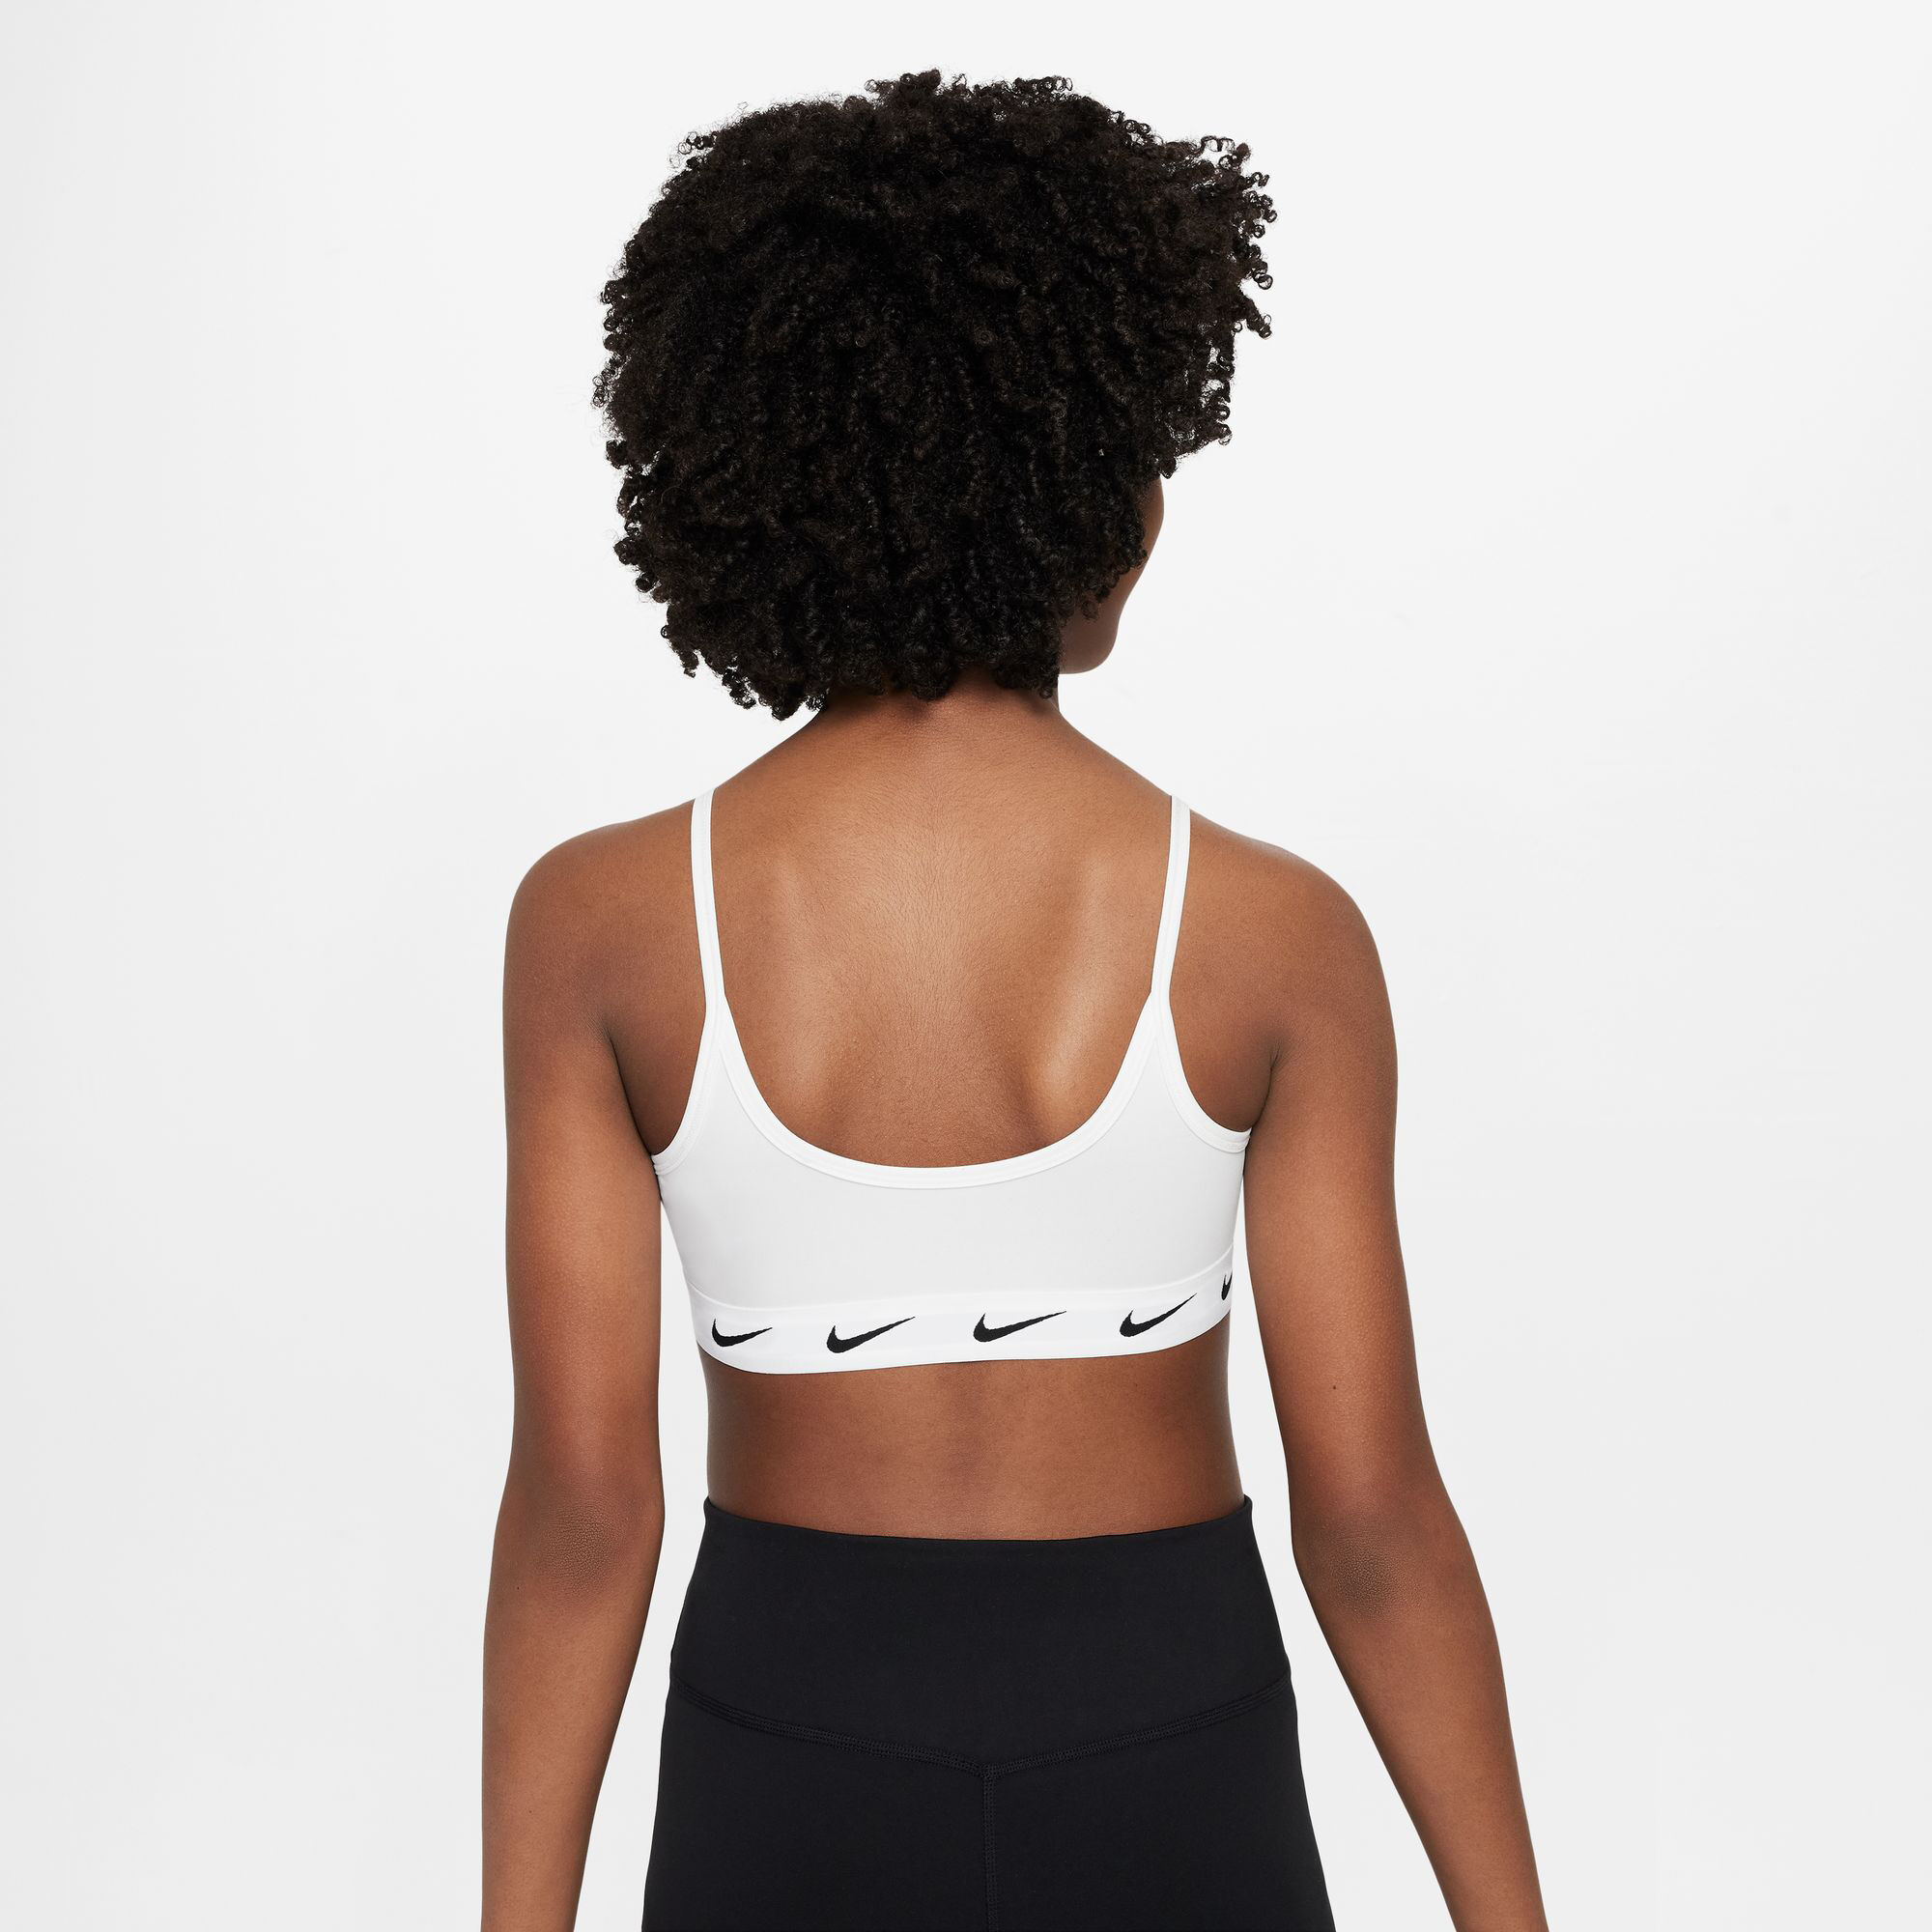 Buy Nike Pro Sports Bra - Girls - Black/White - Youth Large at